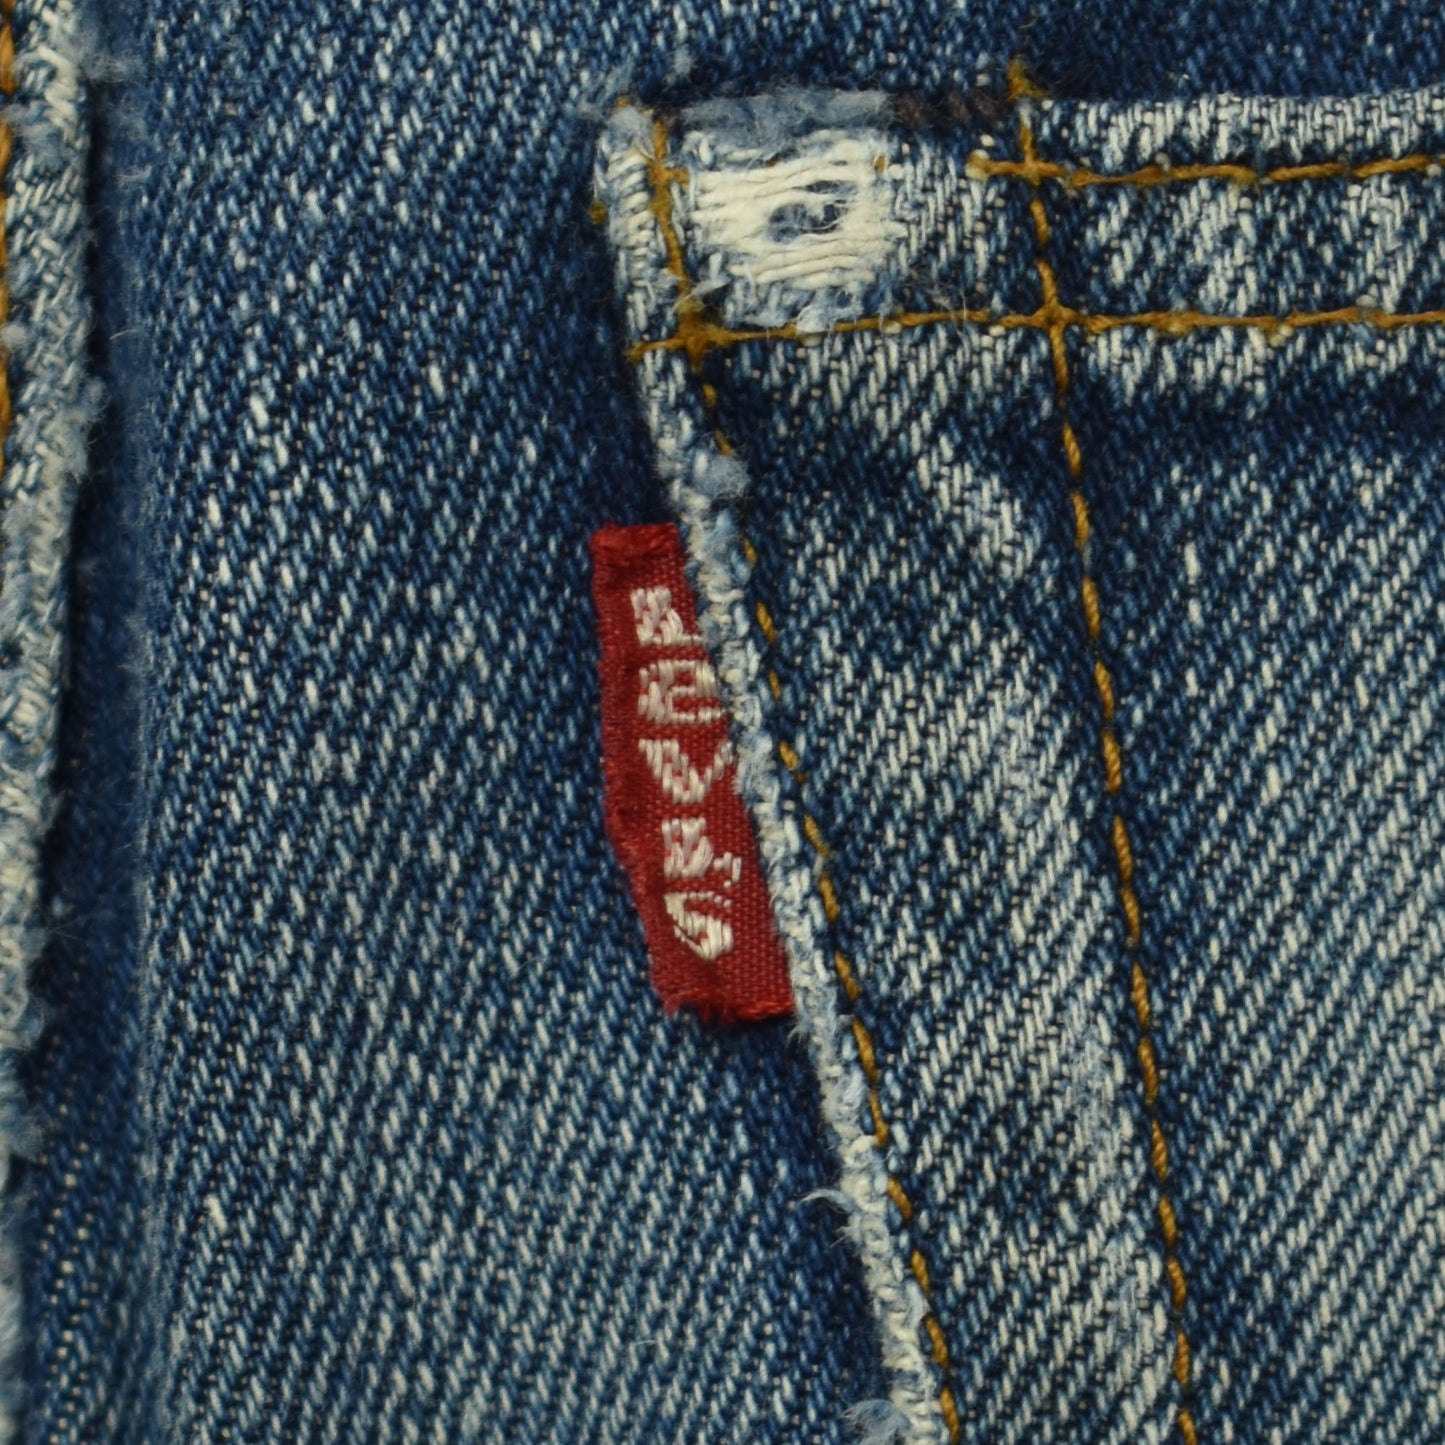 Vintage 70's Levi 501 Selvedge Hem Redline Cut Off Jean Shorts with Button Fly 28" Waist